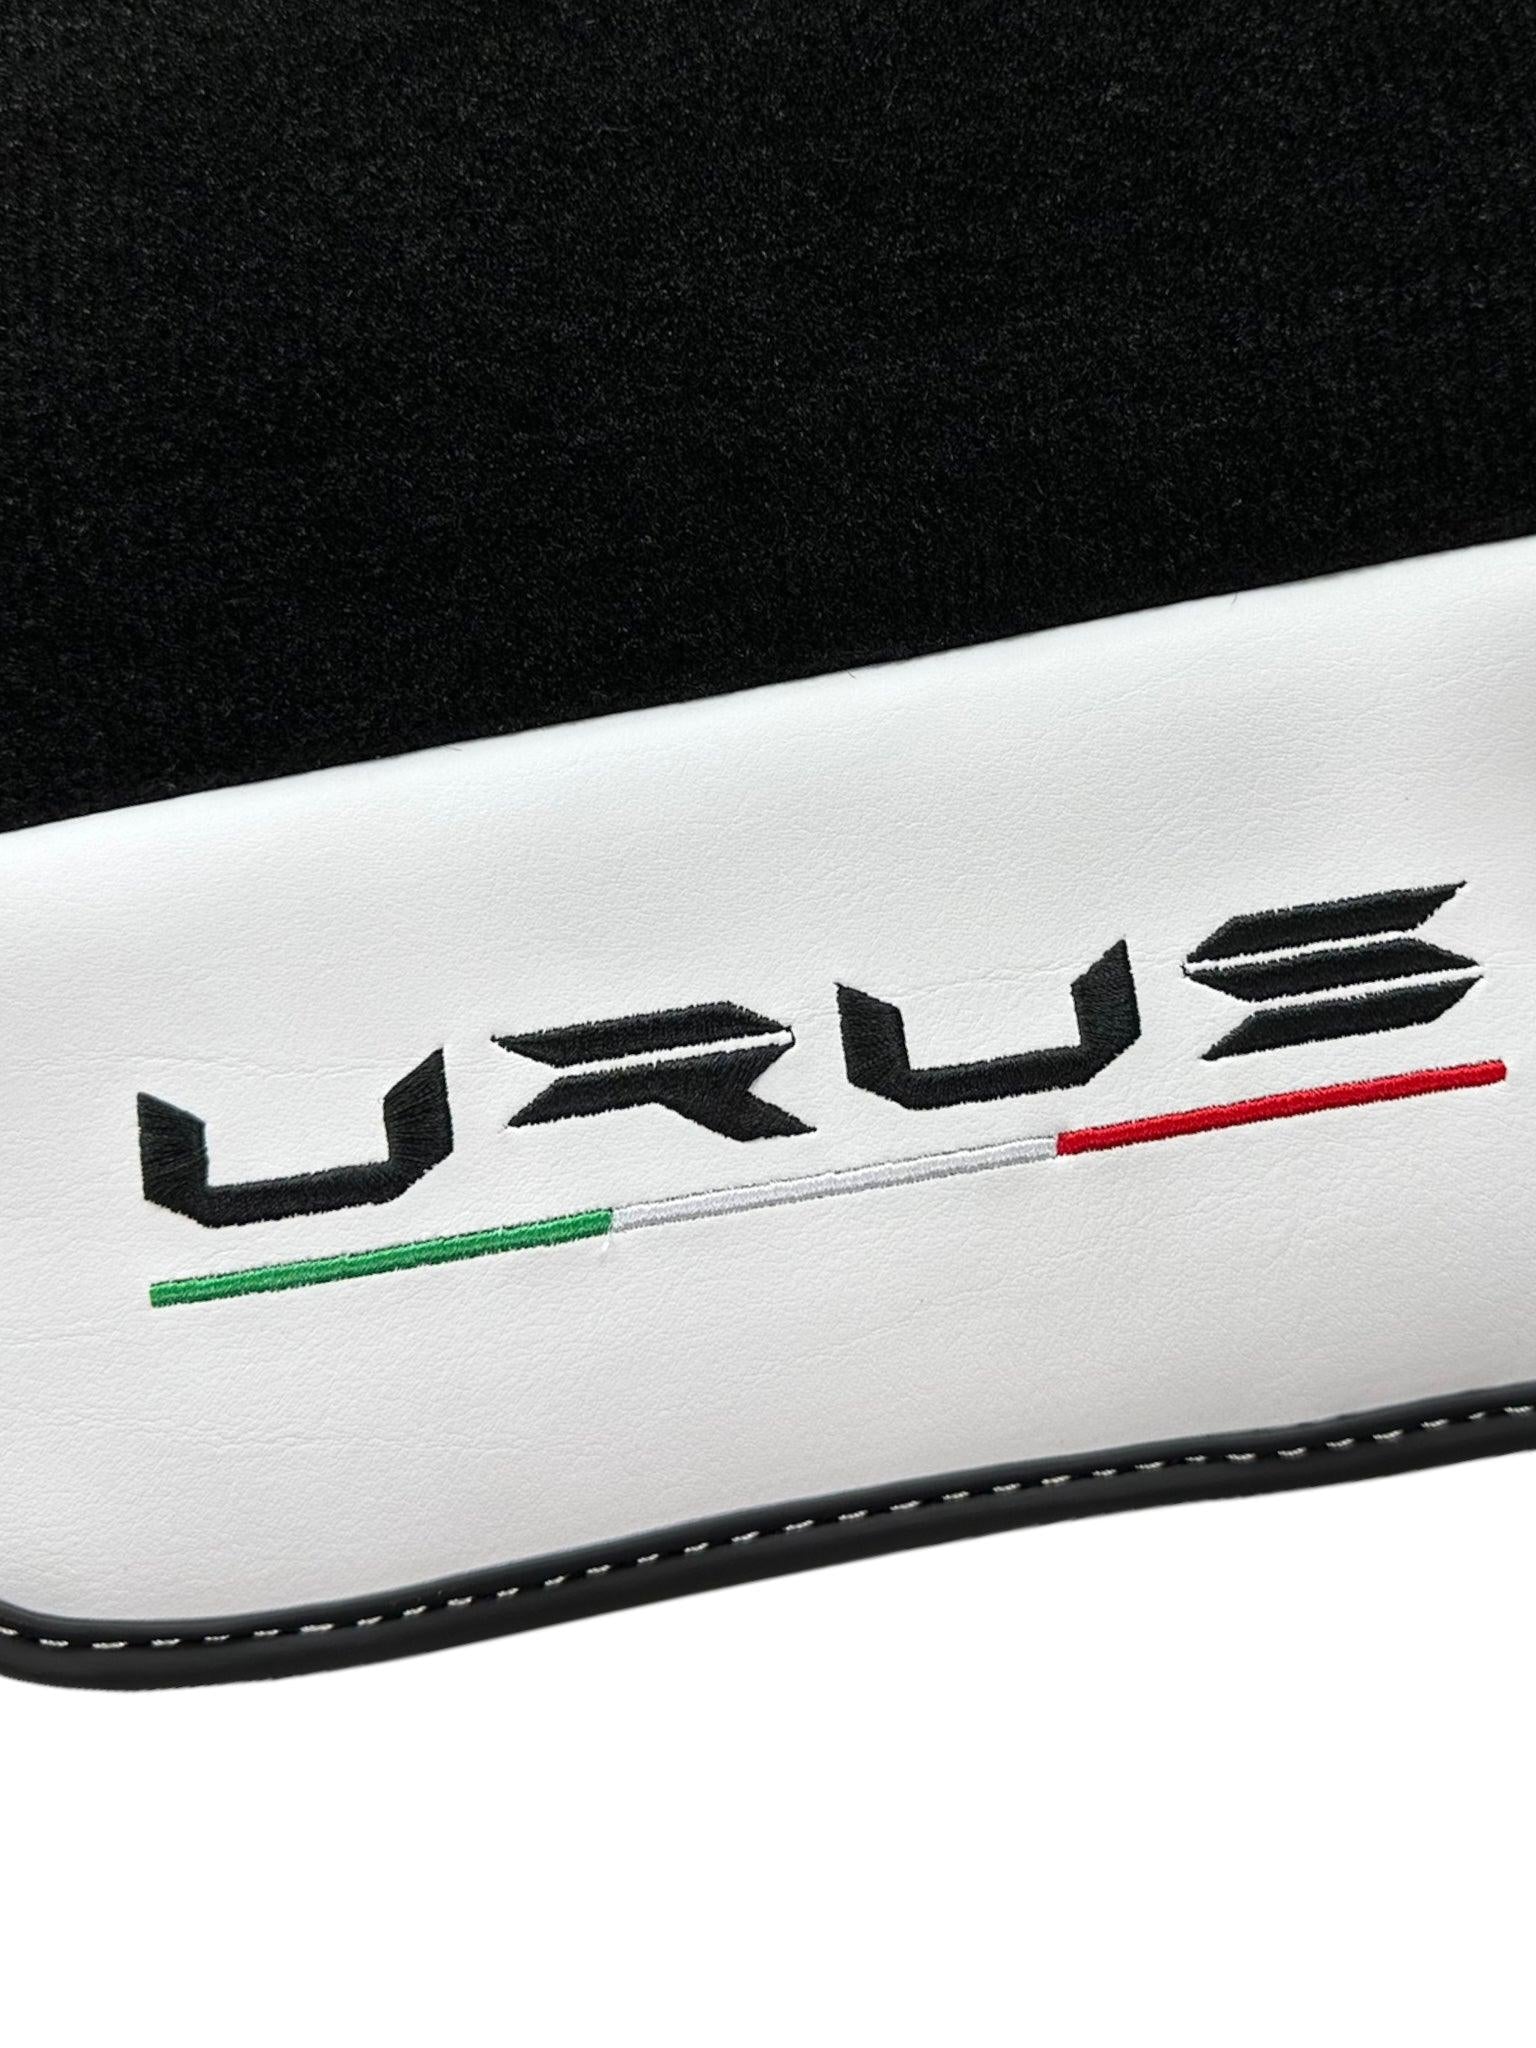 Black Floor Mats for Lamborghini Urus With White Leather - AutoWin